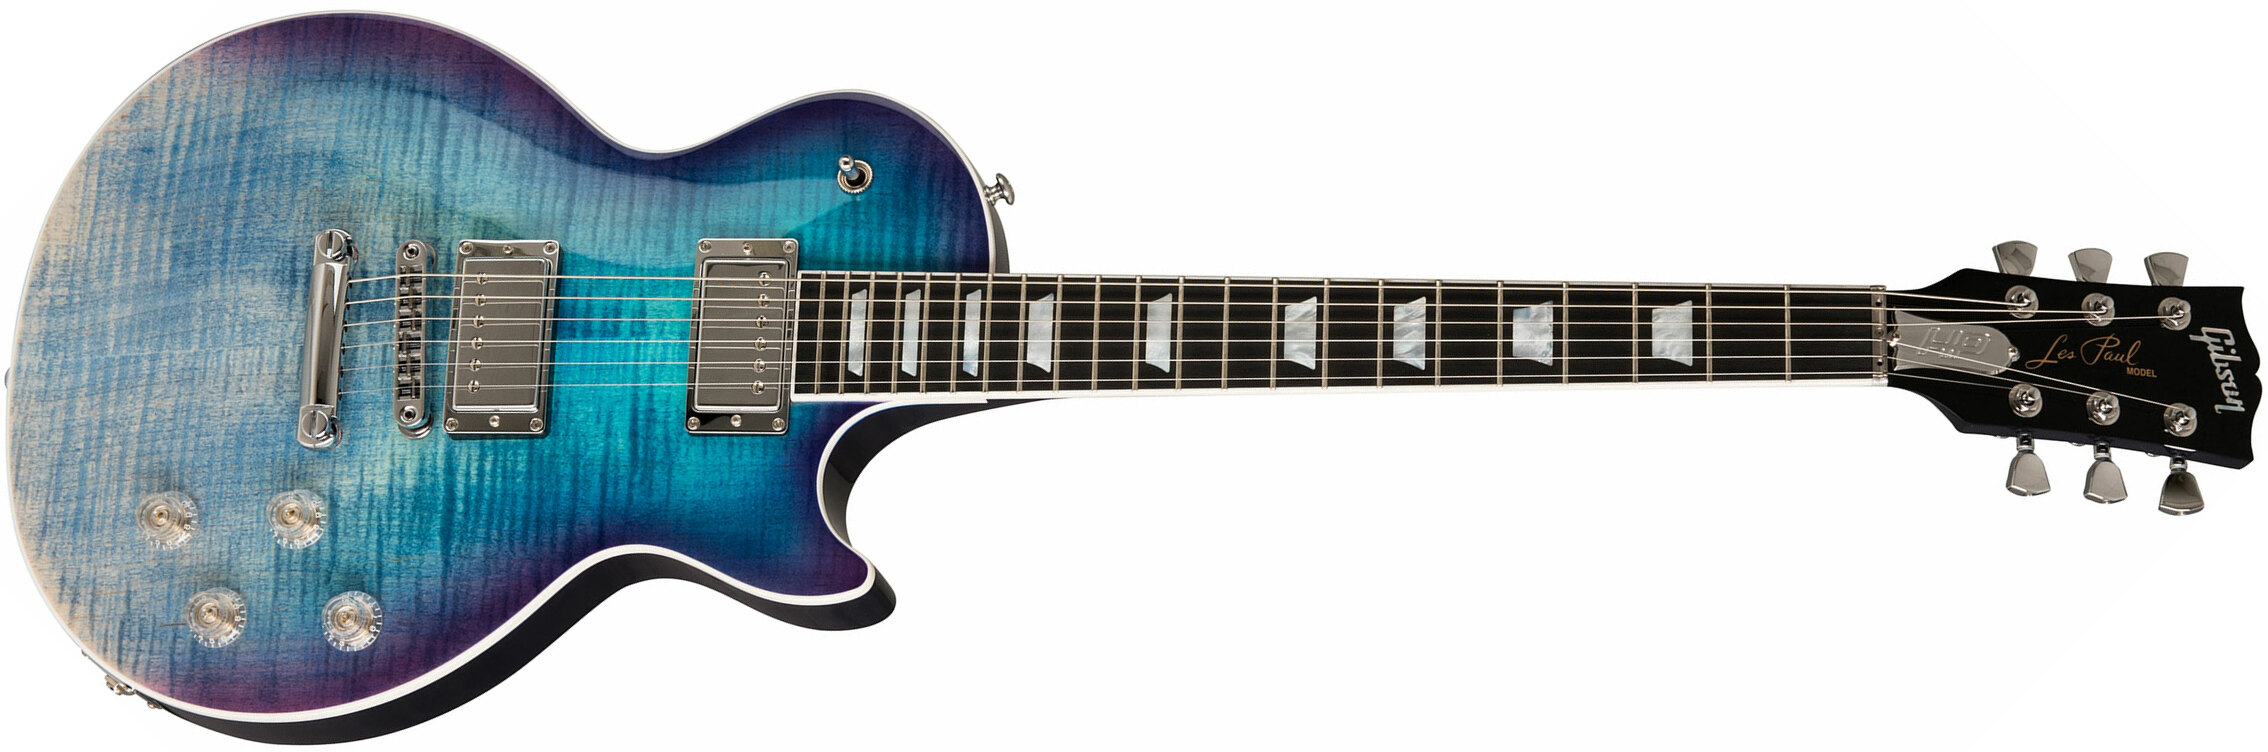 Gibson Les Paul Hp-ii High Performance 2019 Hh Ht Rw - Blueberry Fade - Enkel gesneden elektrische gitaar - Main picture